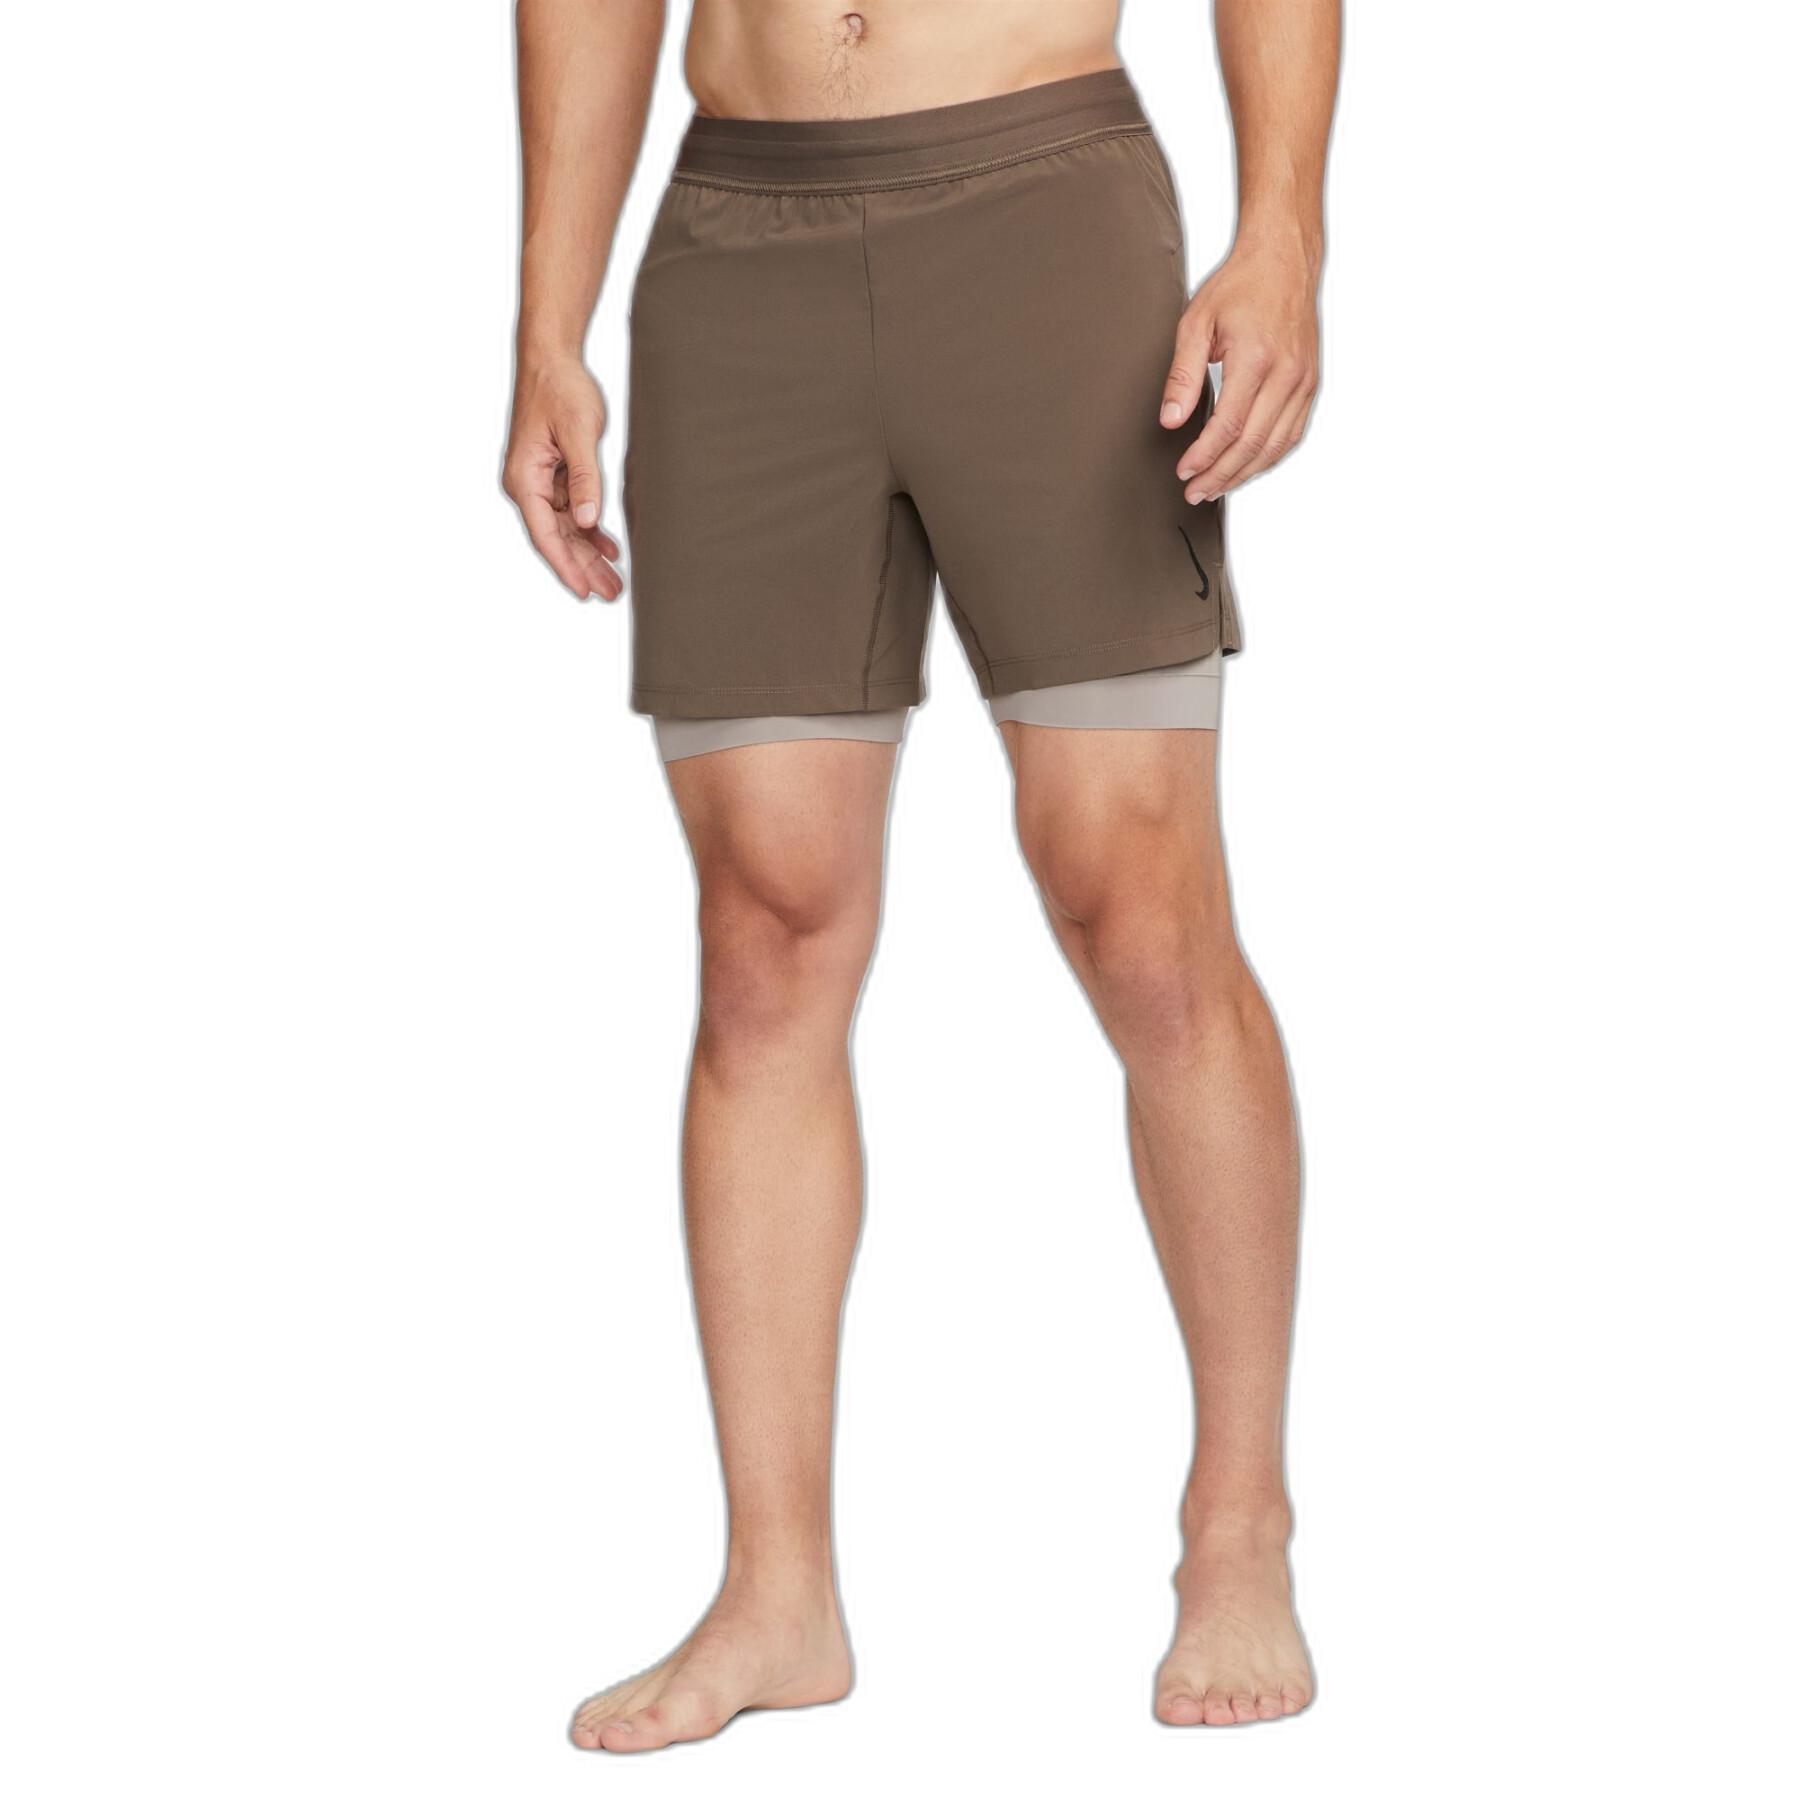 2 in 1 shorts Nike Yoga - Shorts - Men's Clothing - Fitness